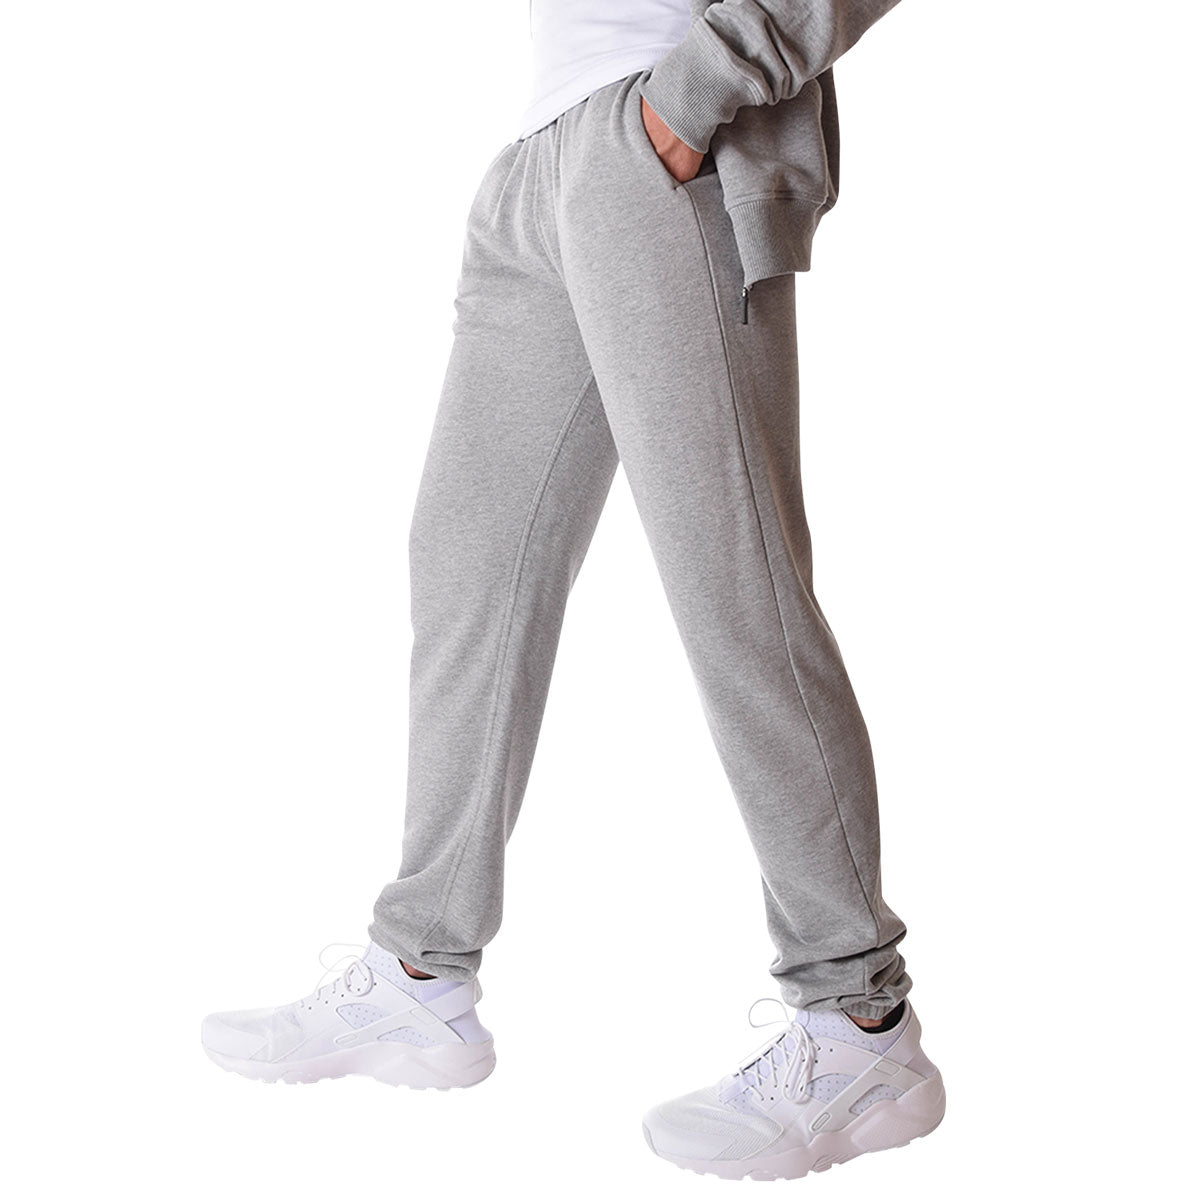 Men's Tall Sweatpants in Grey Mix 